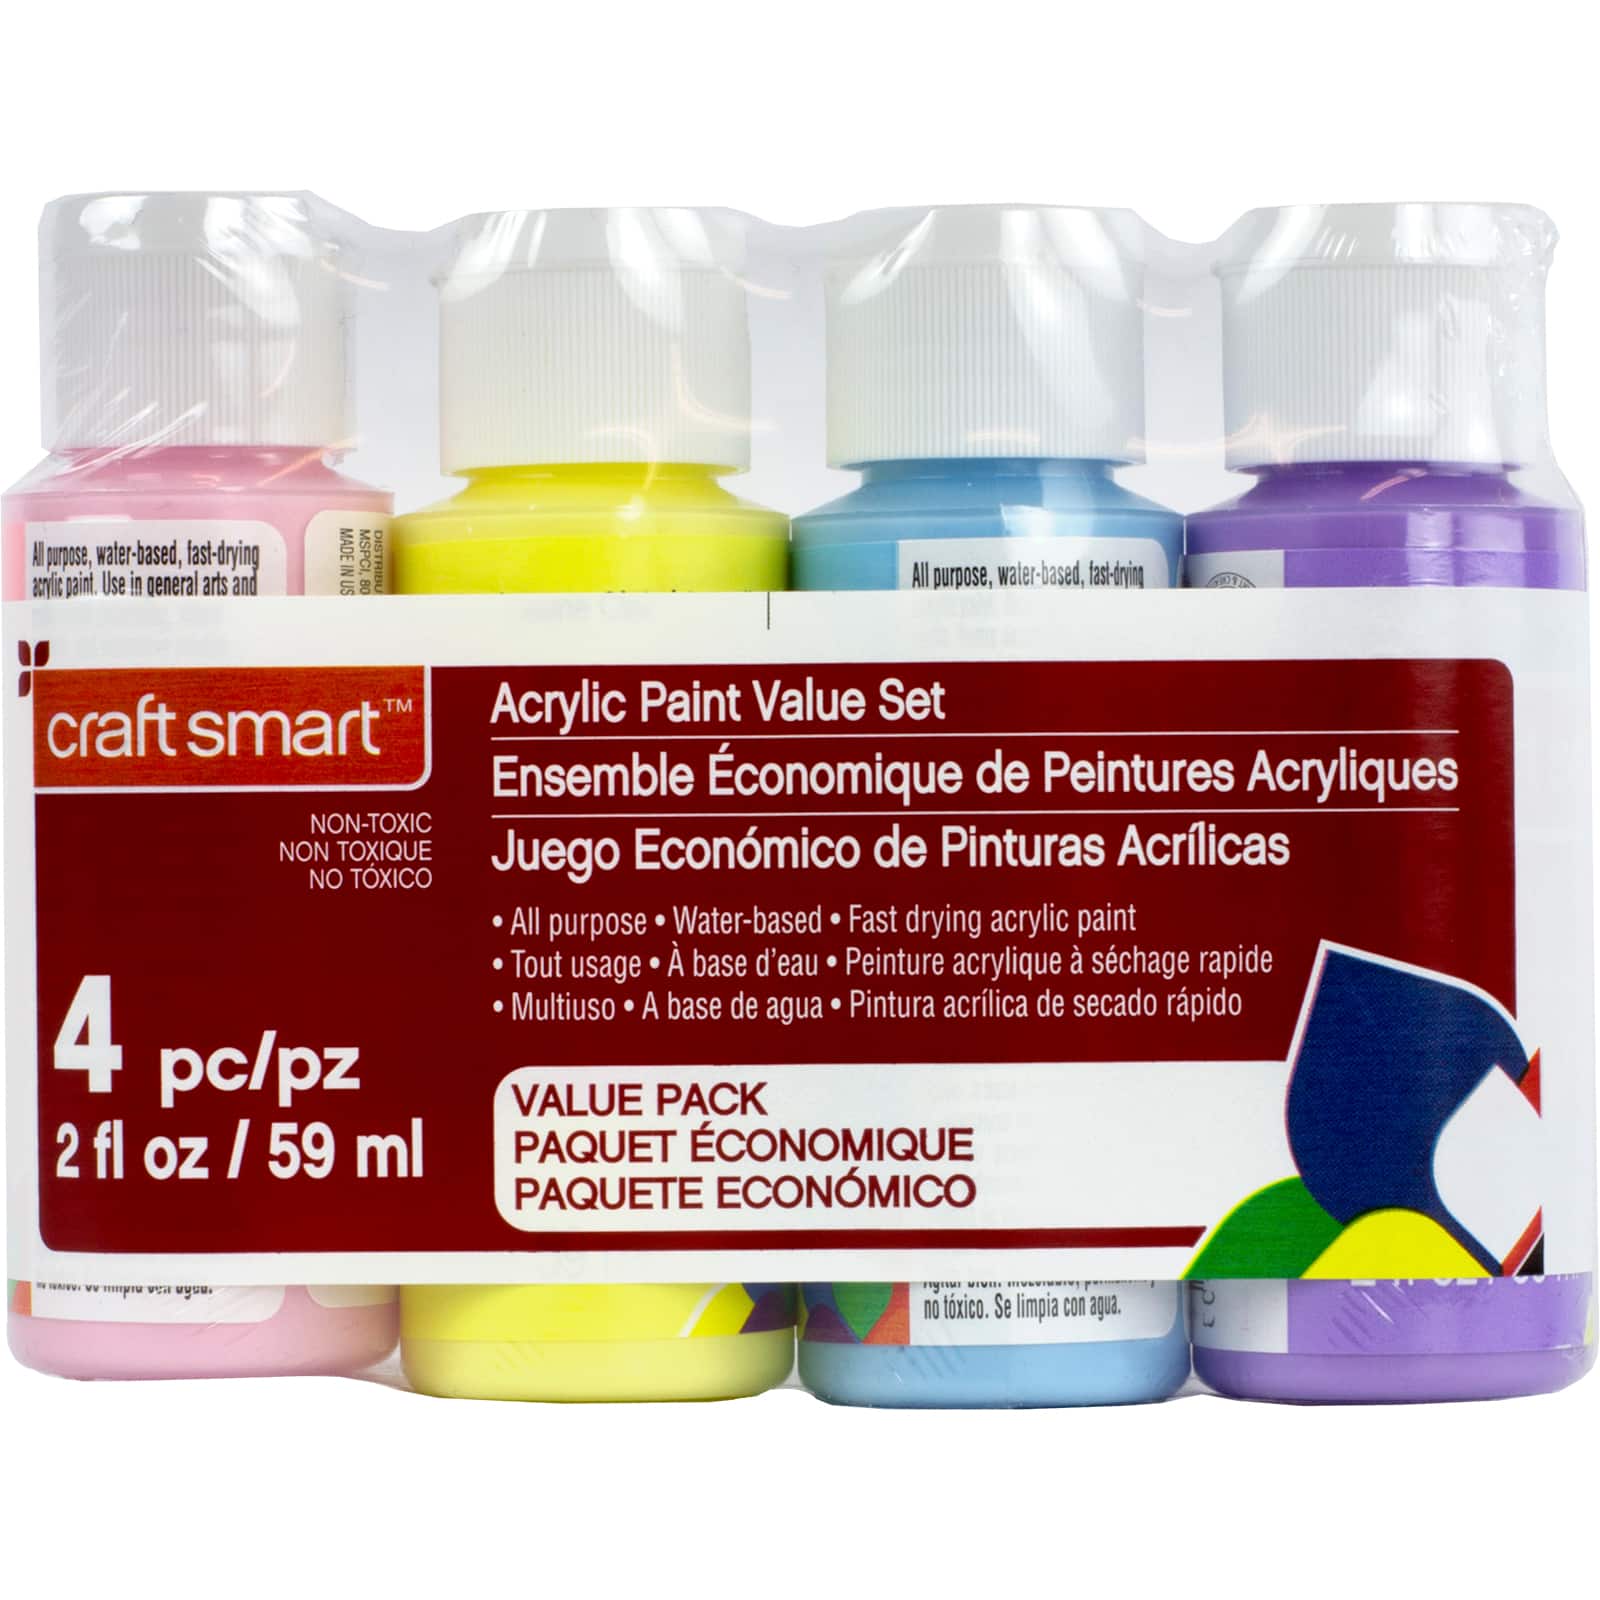 Craft Smart Pastel Acrylic Paint Value Set - 2 fl oz